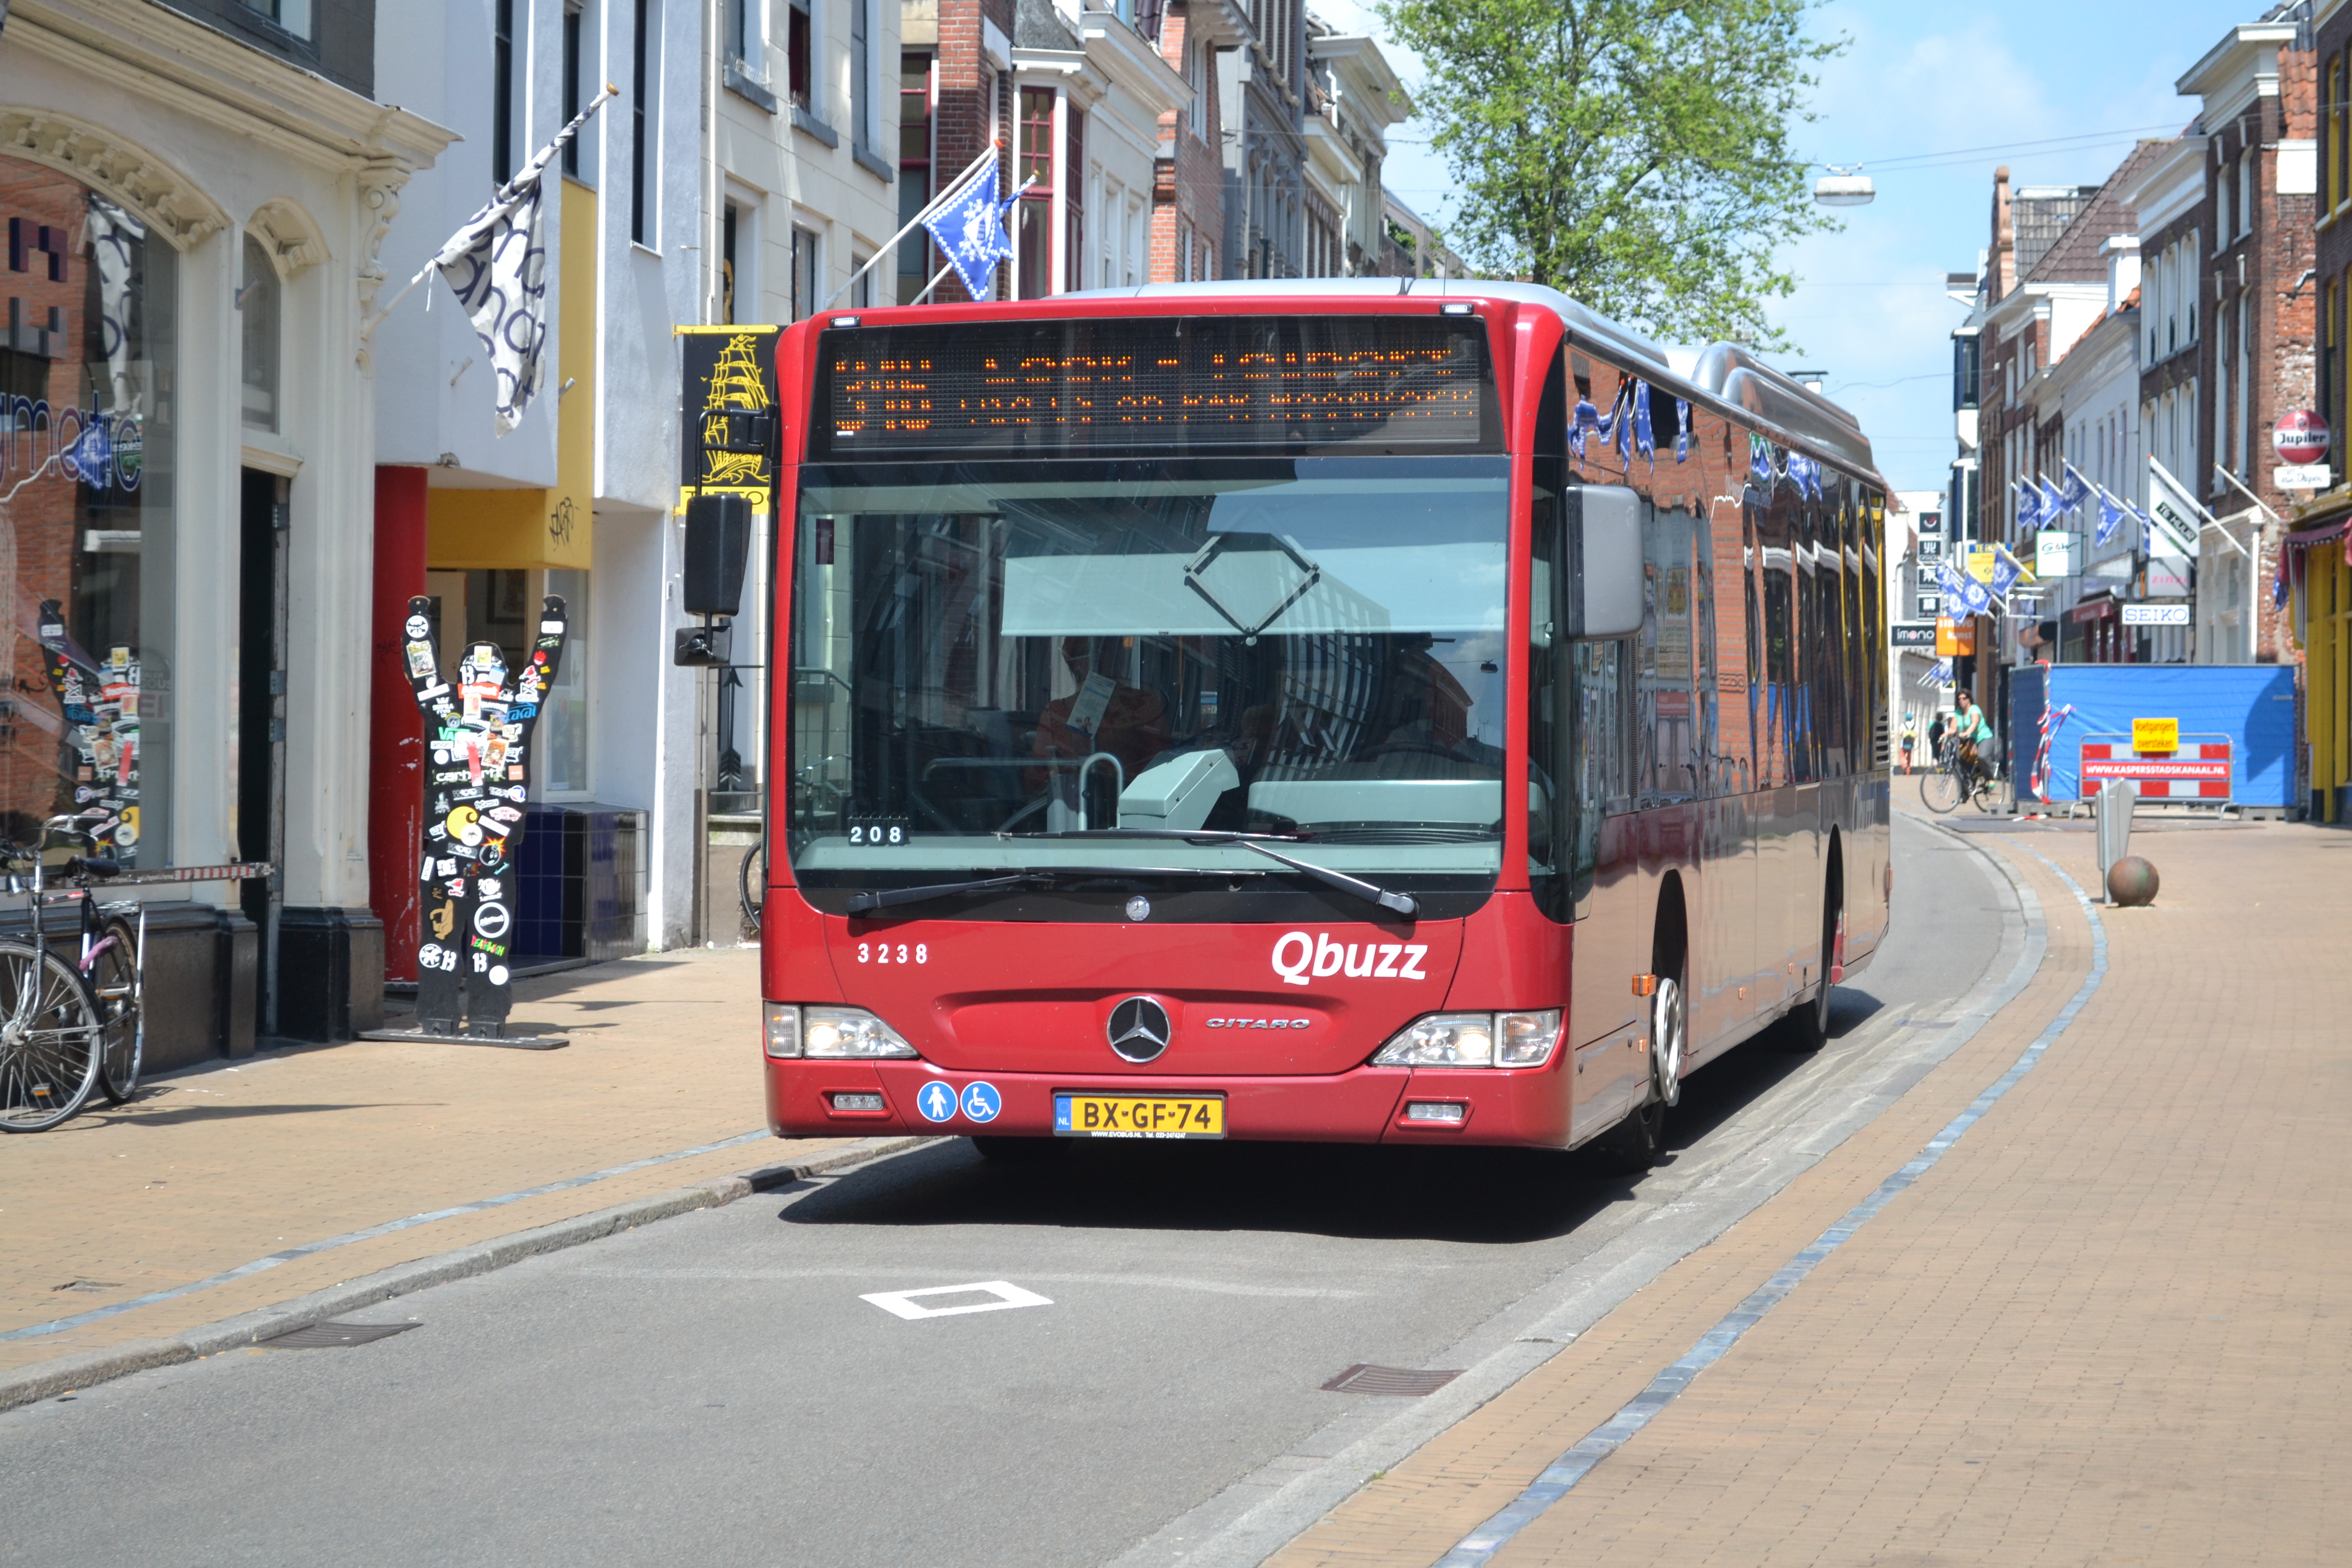 File:Qbuzz Groningen Gelkingestraat (9305435351).jpg - Wikimedia Commons